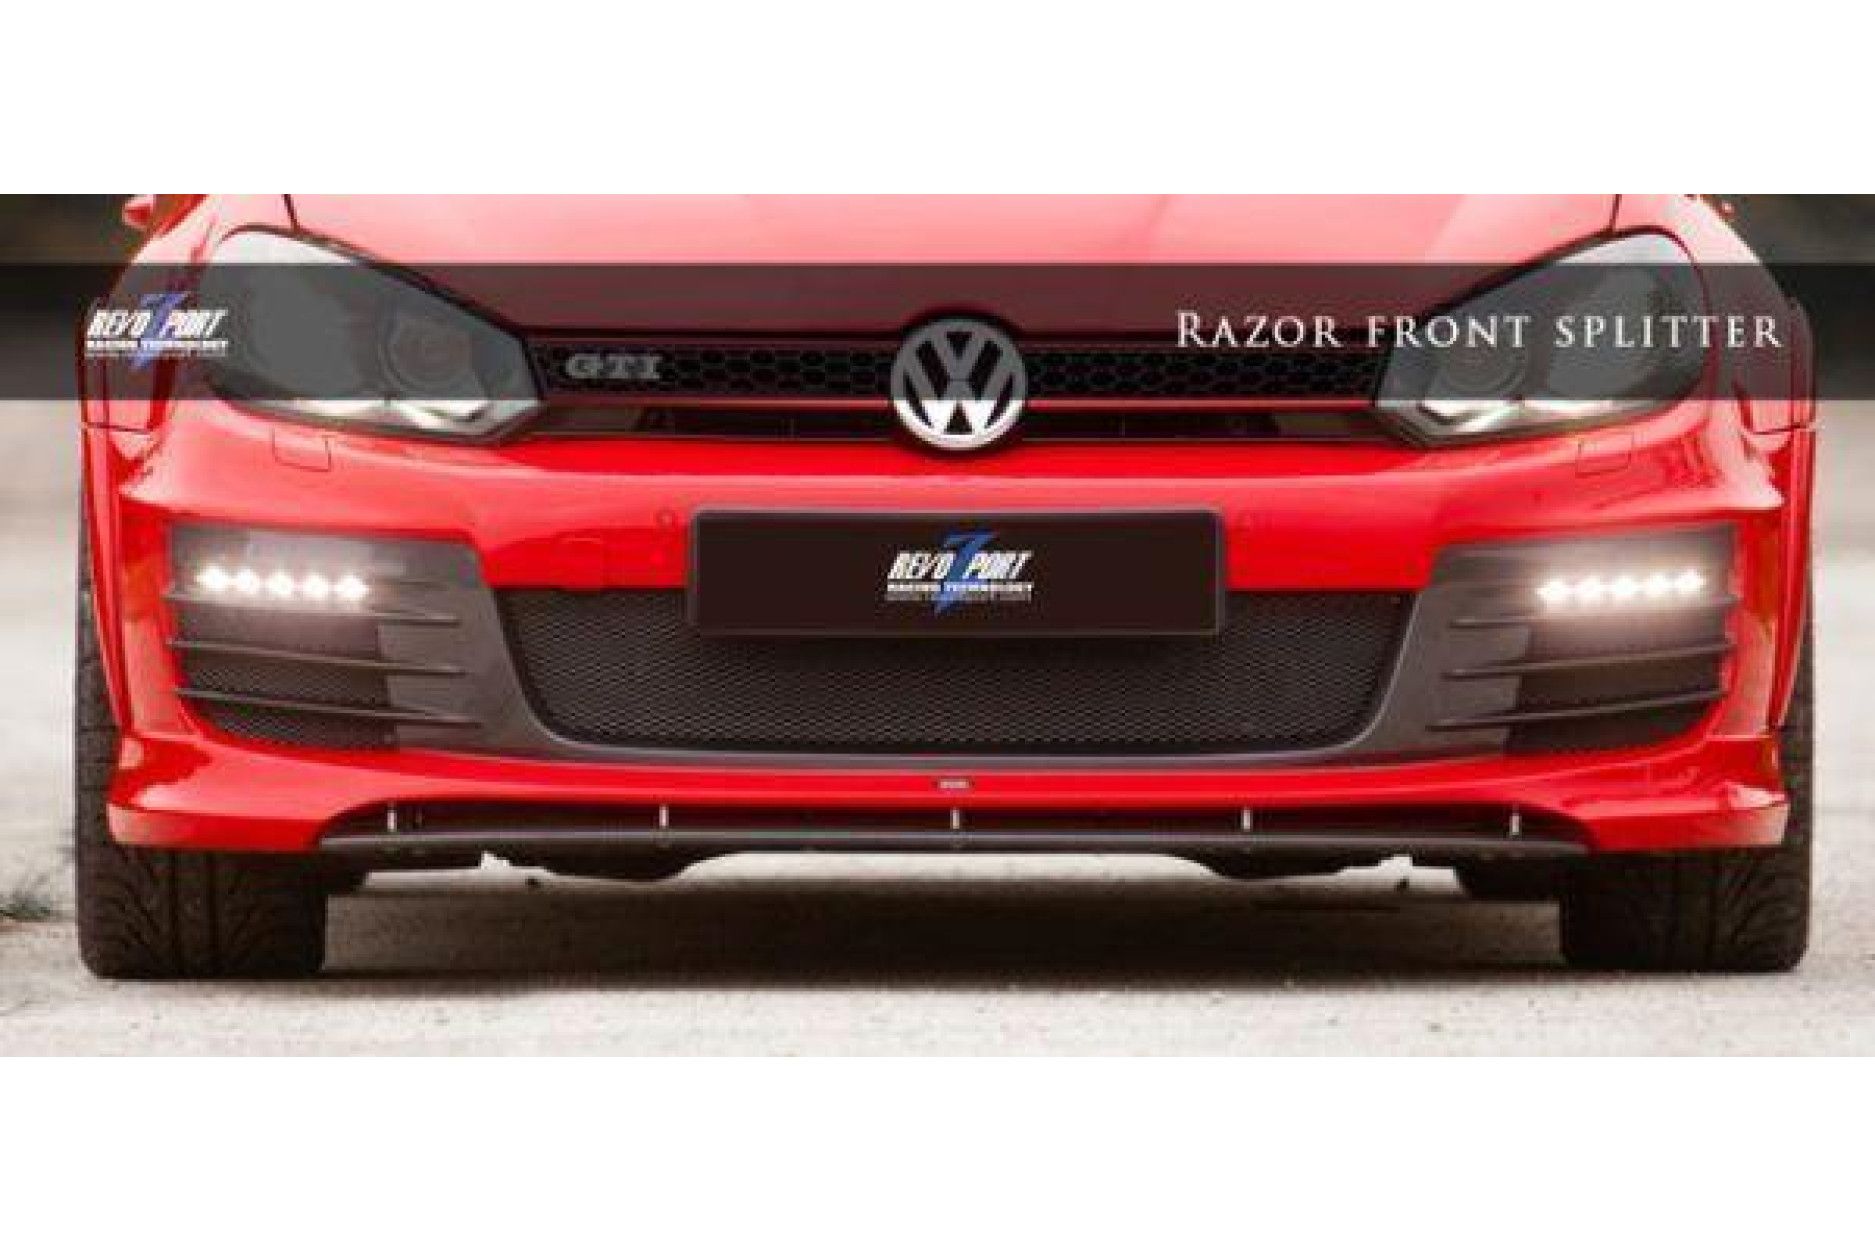 RevoZport Frontsplitter for Volkswagen Golf MK6|Golf 6 GTI "Razor"